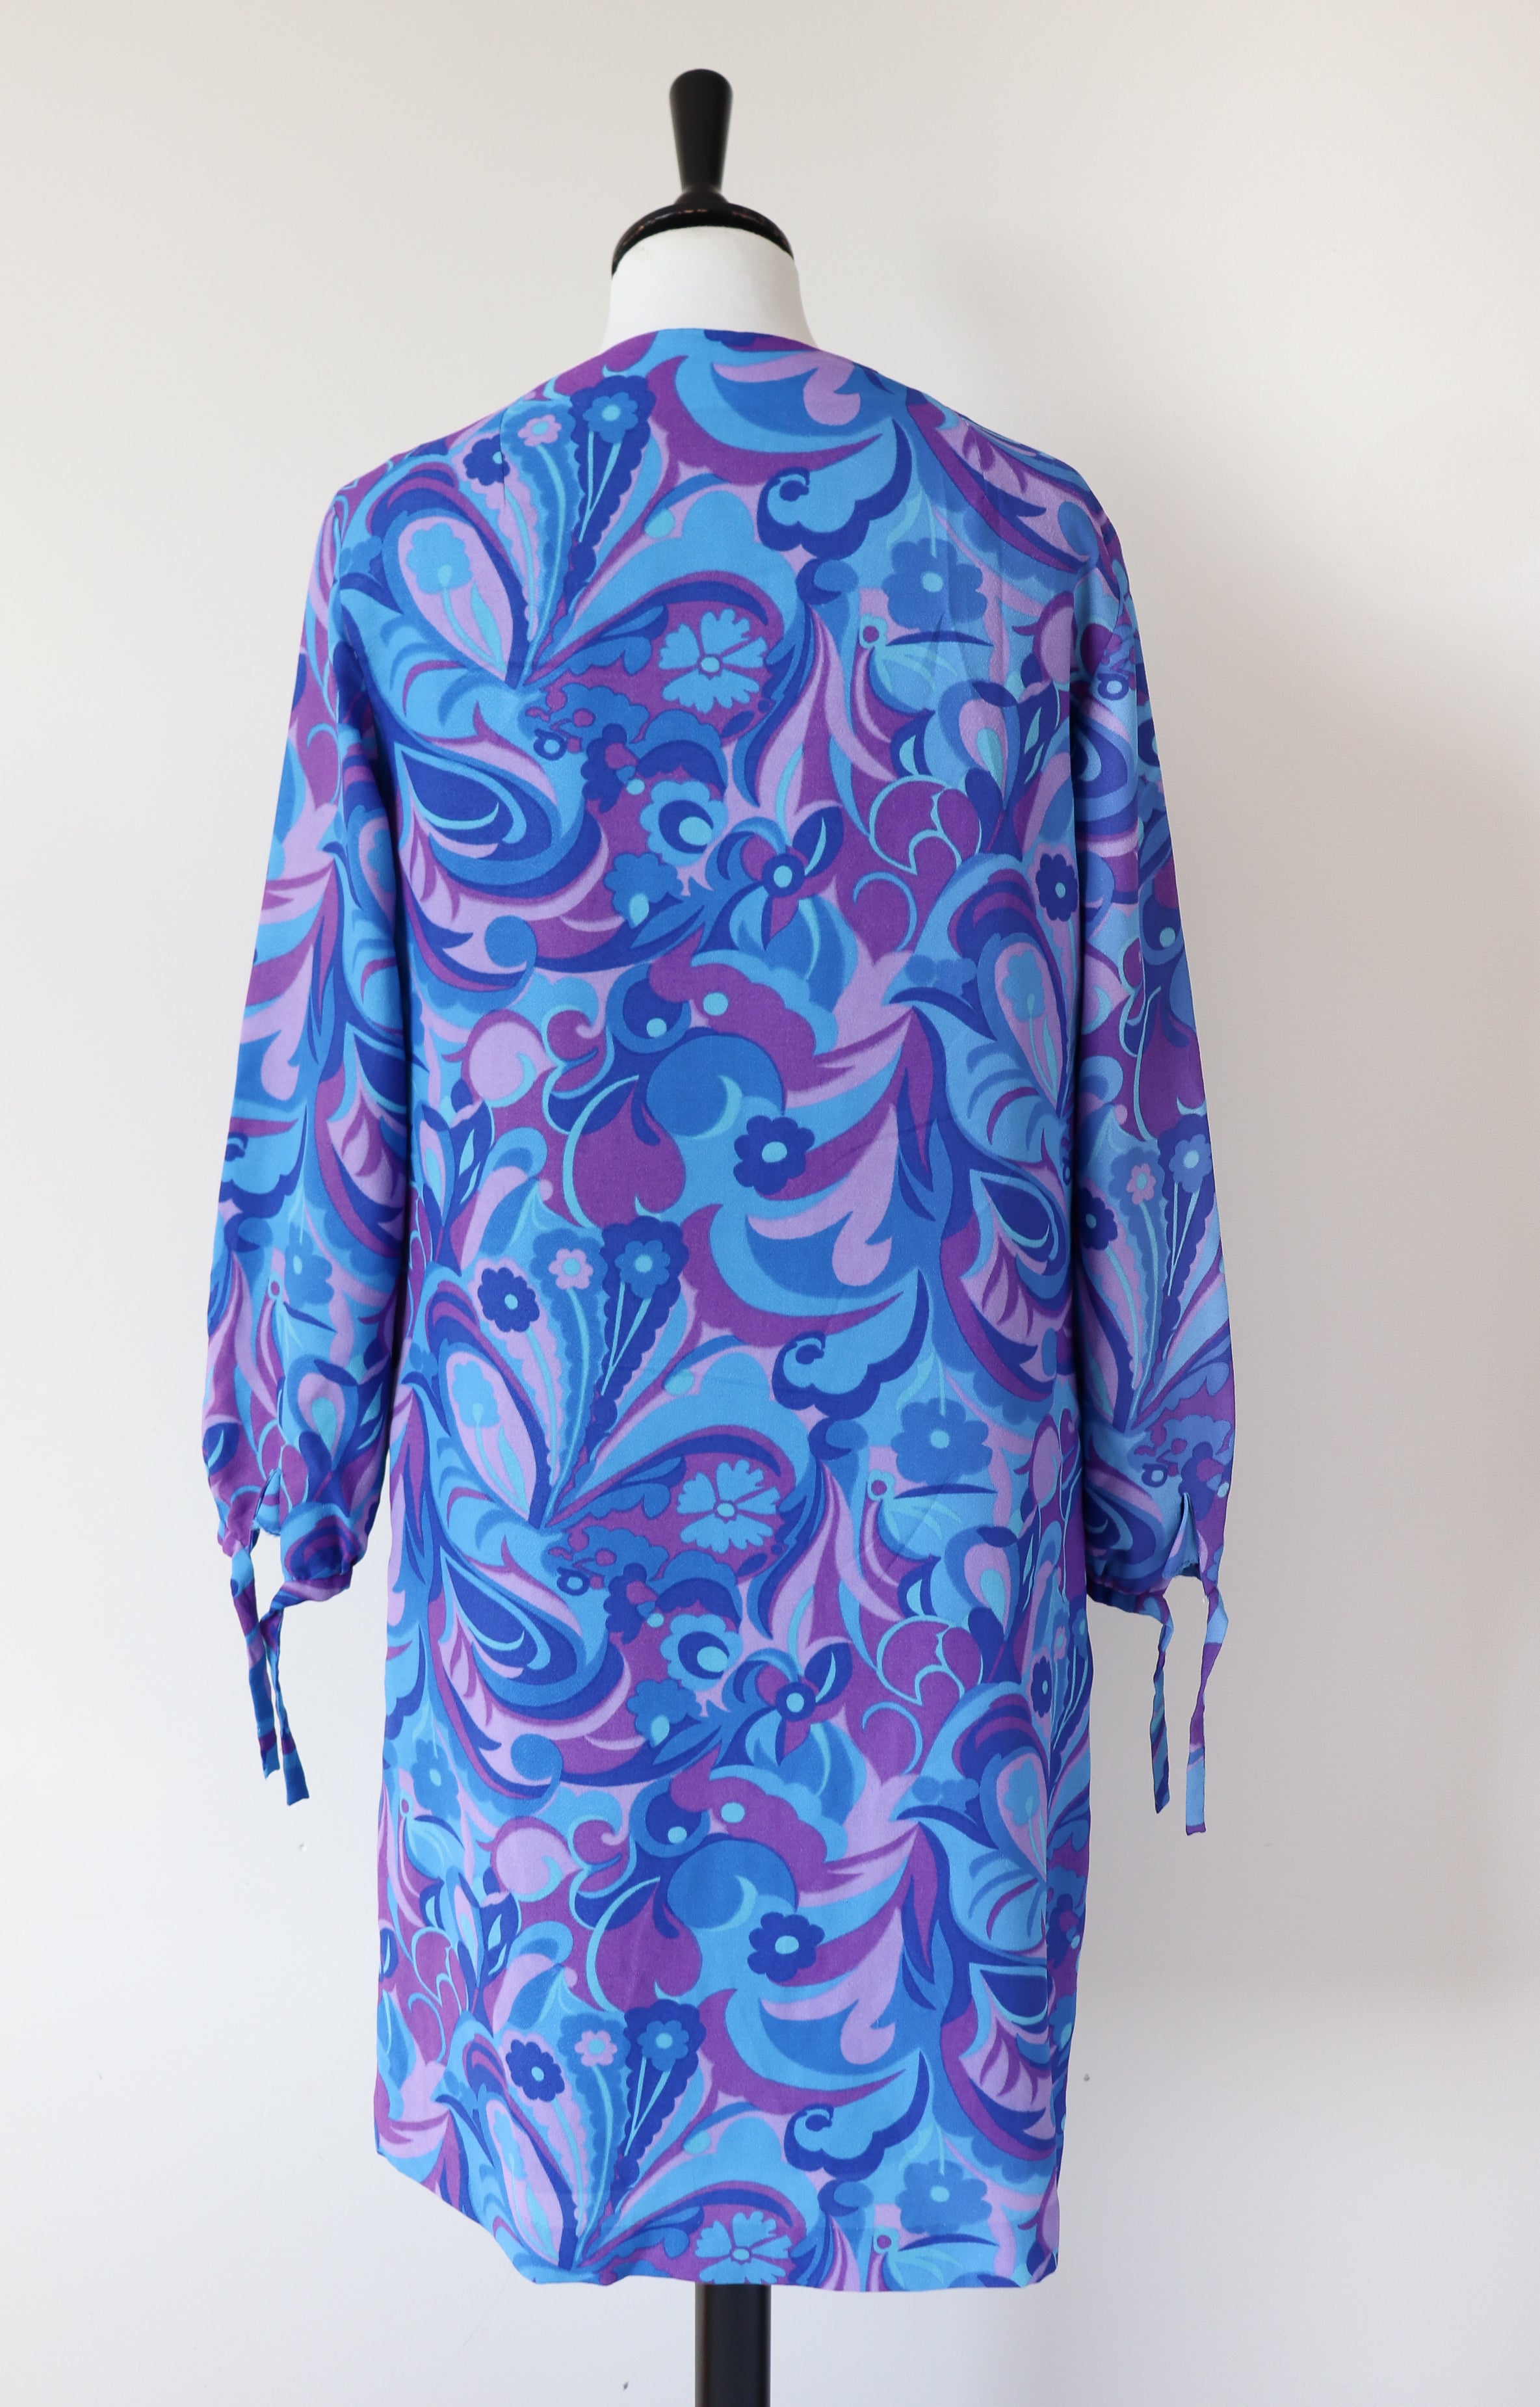 1970s Psychedelic Dress - Long Sleeves - Purple / Blue - S / UK 10